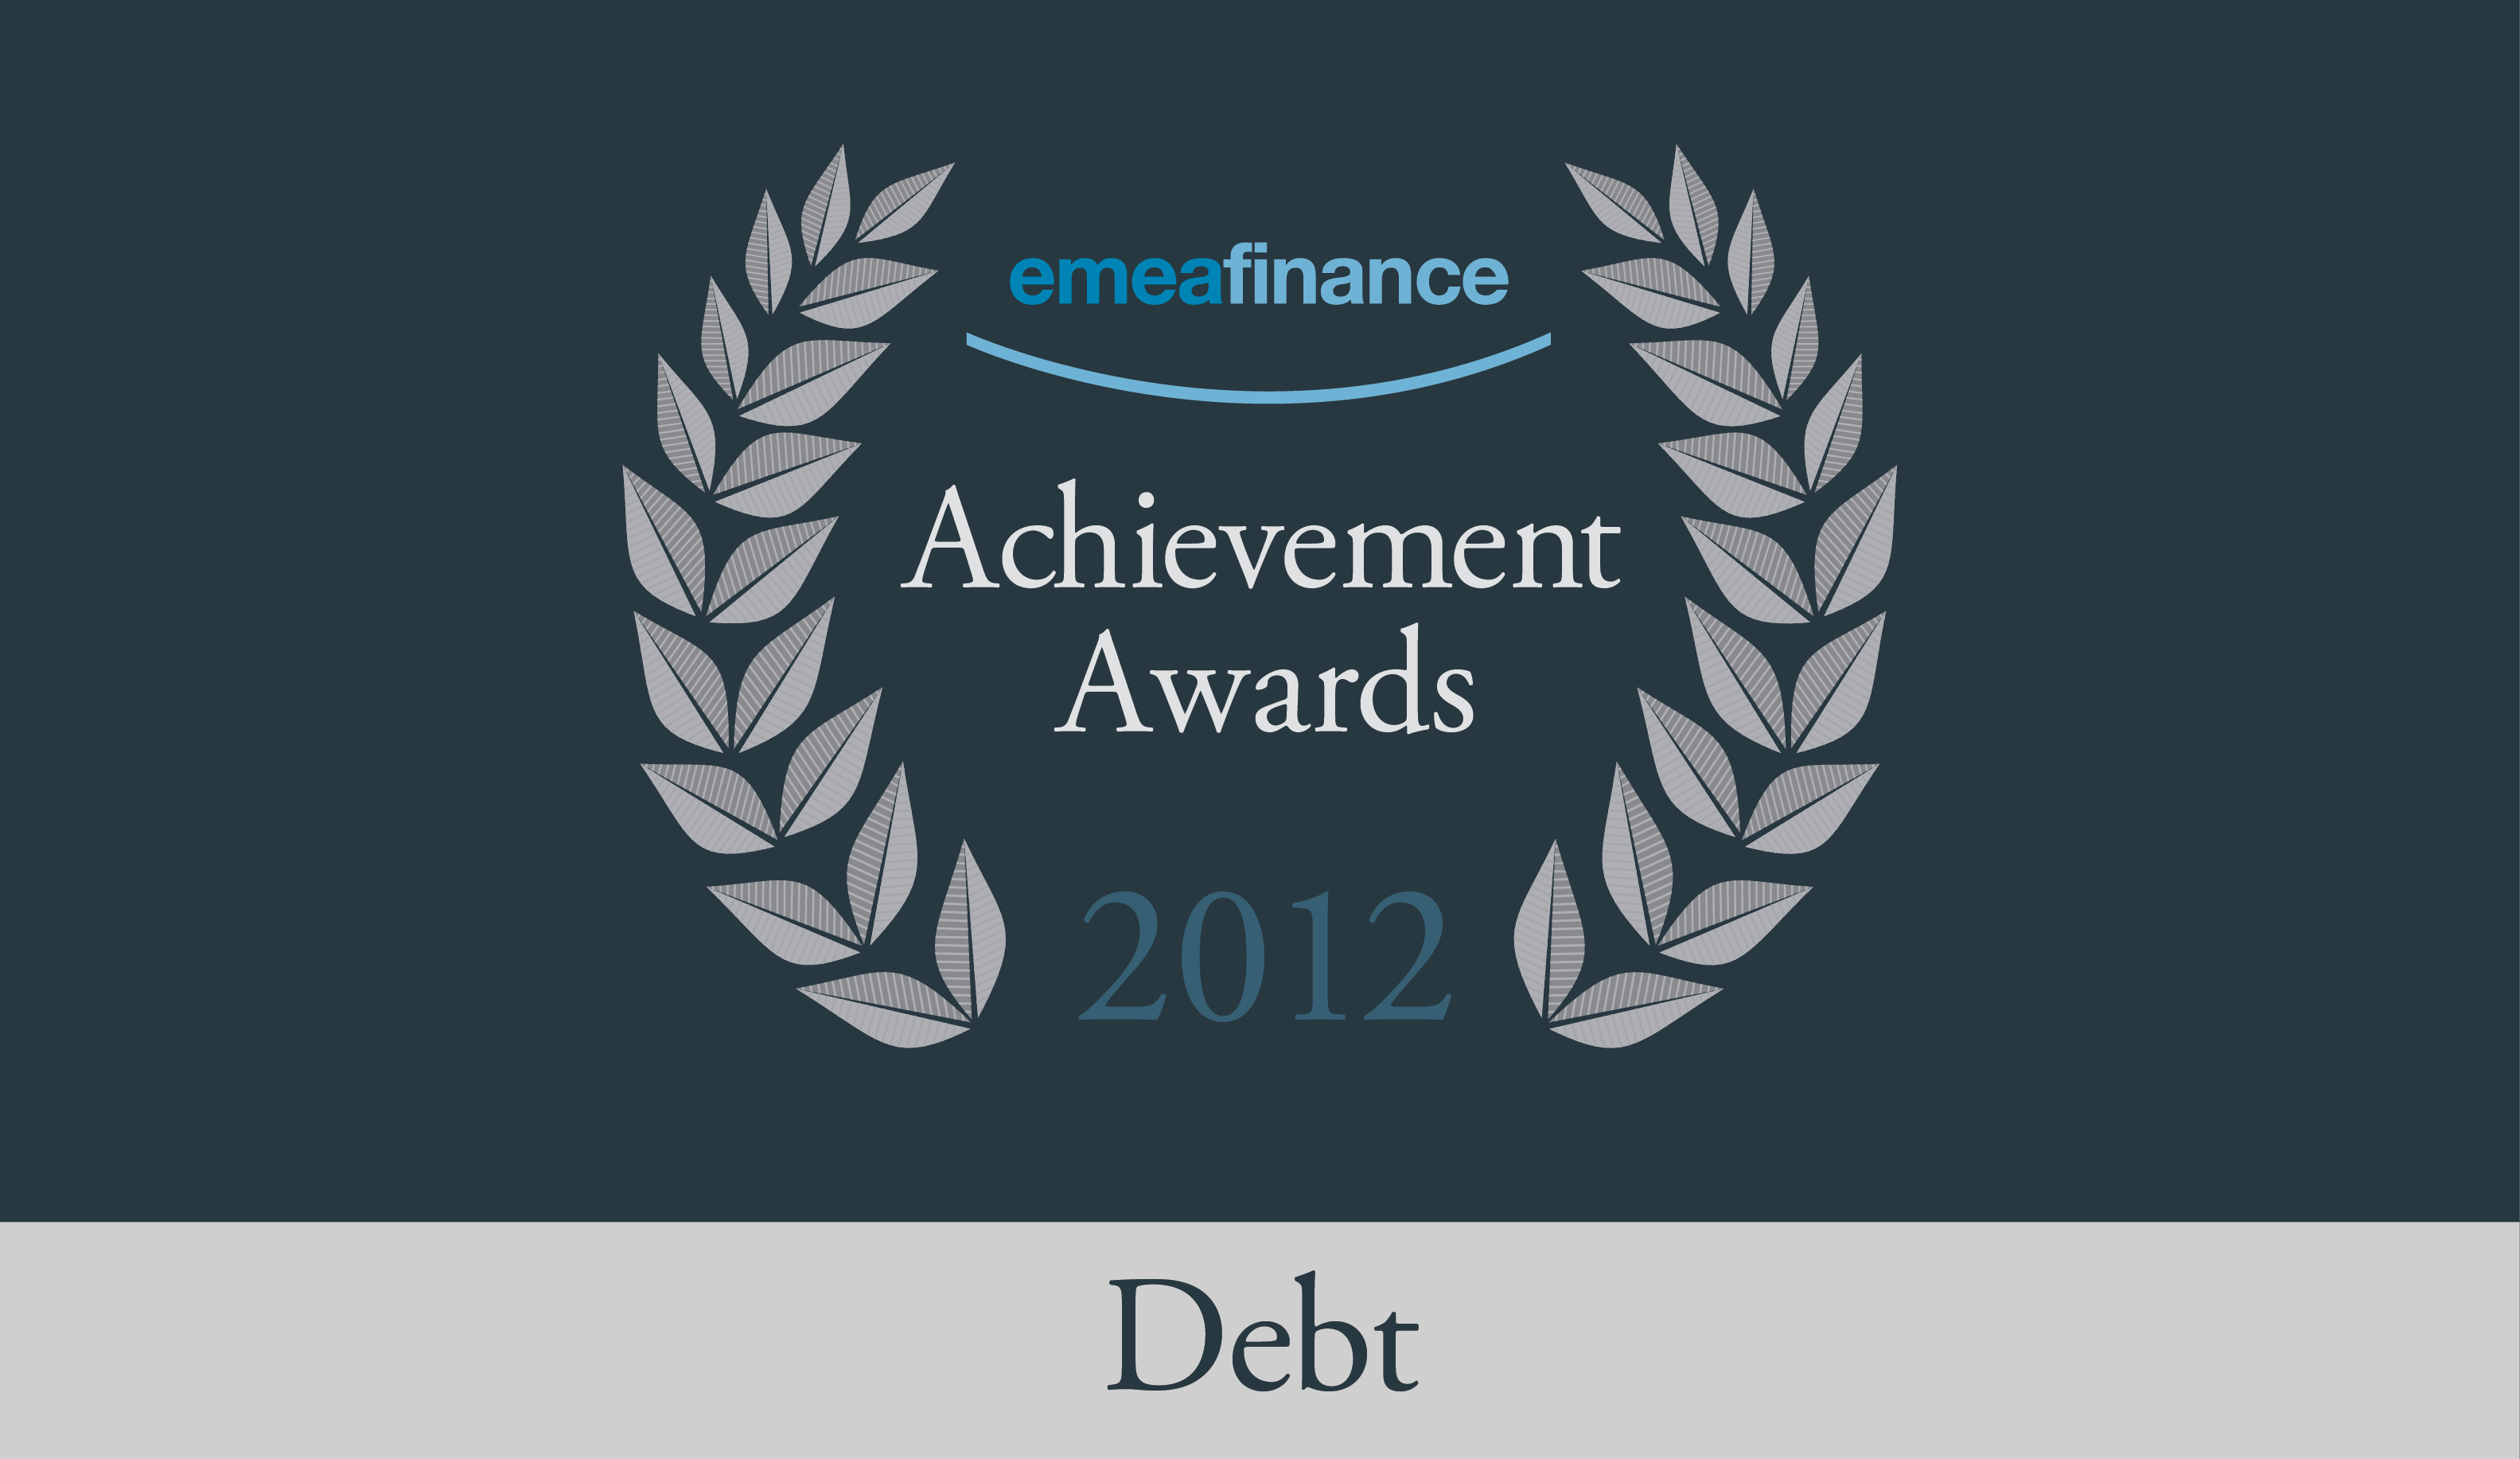 Achievement Awards 2012: Debt markets